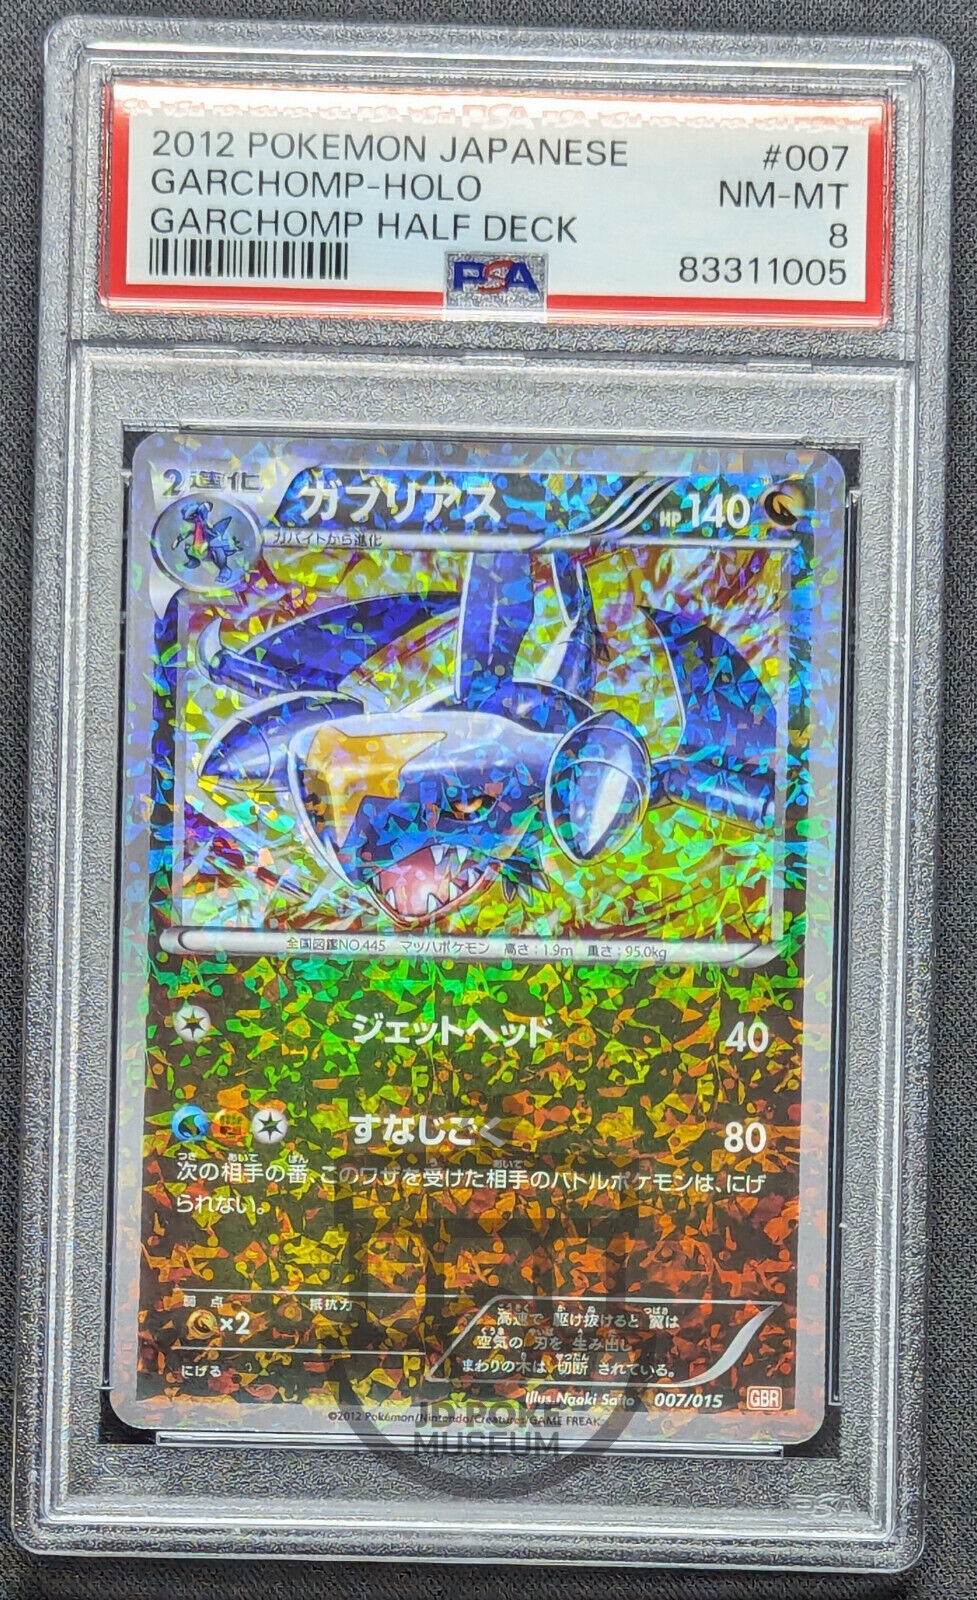 Pokemon 2012 Japanese Garchomp Half Deck GBR Garchomp 007/015 Holo Card - PSA 8